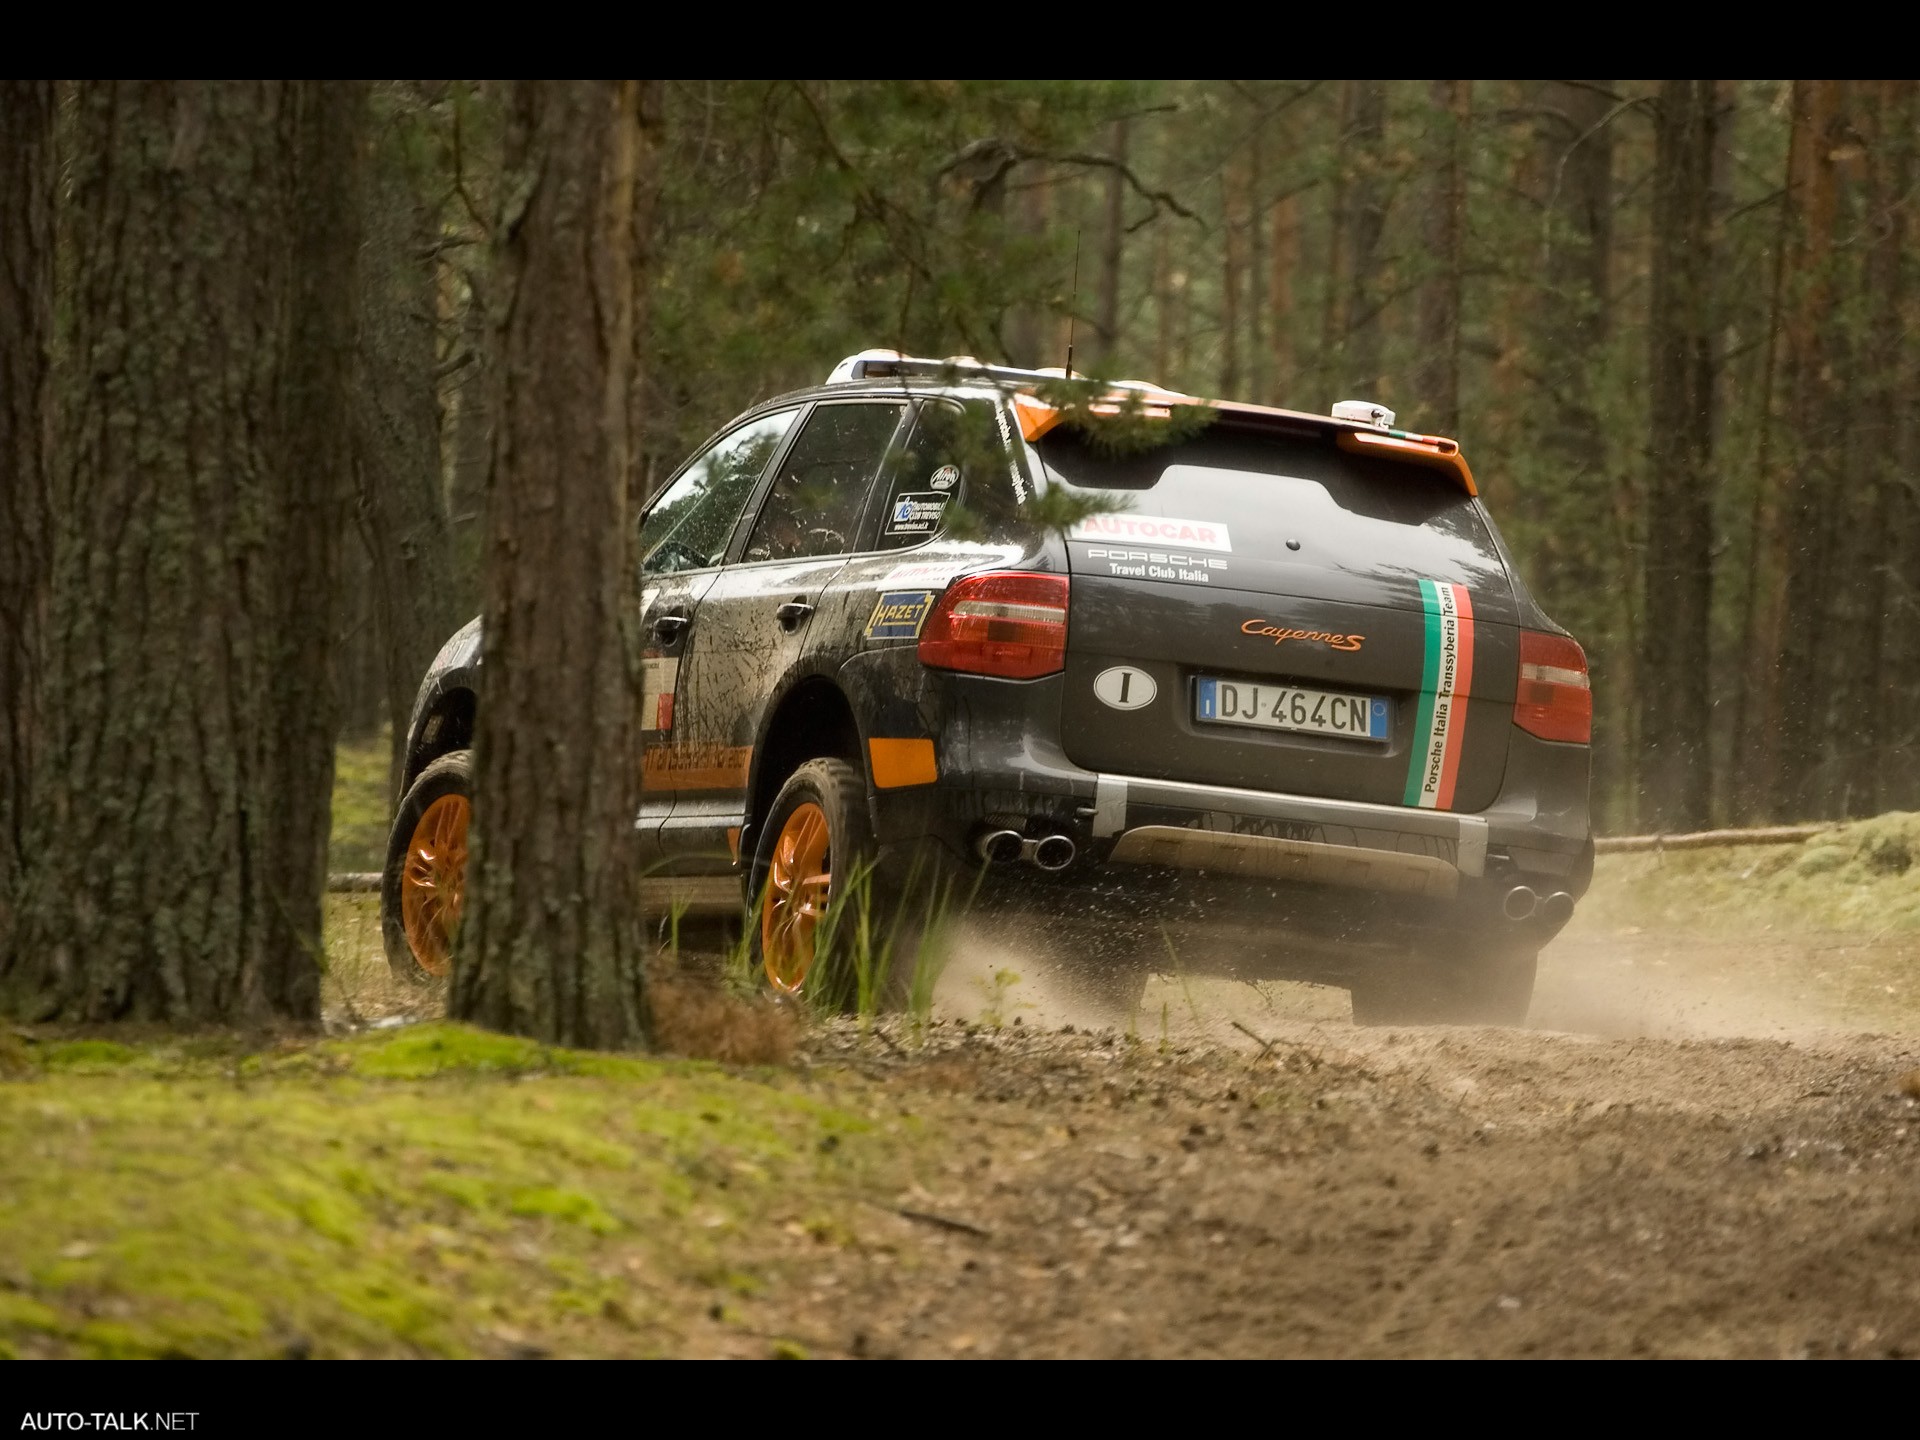 Porsche Transsyberia Rally